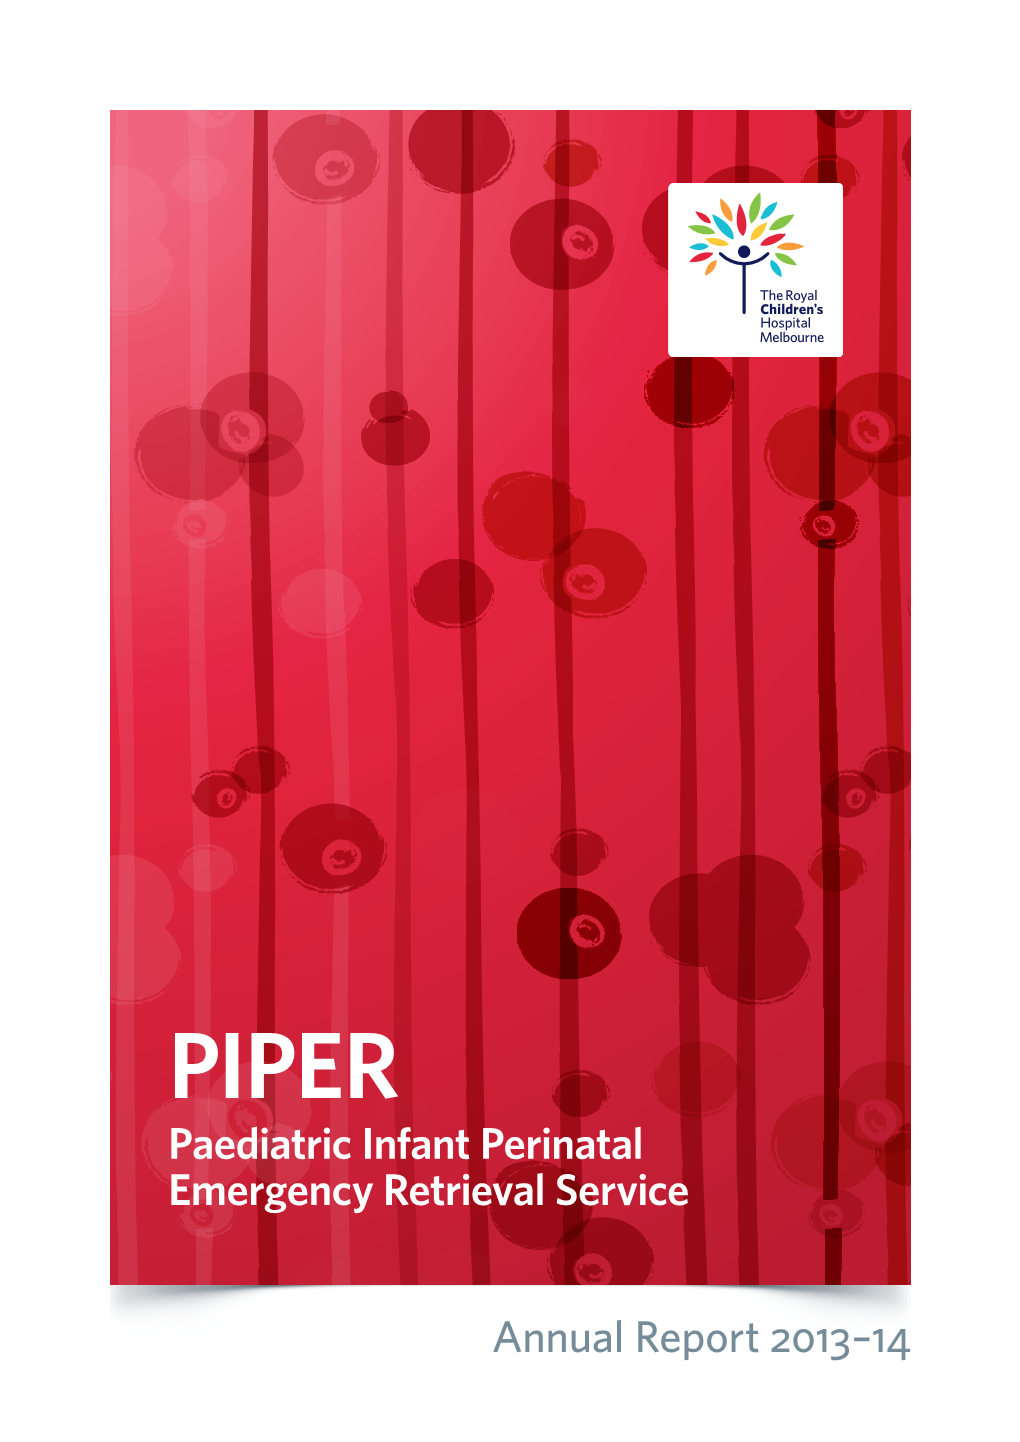 PIPER Paediatric Infant Perinatal Emergency Retrieval Service